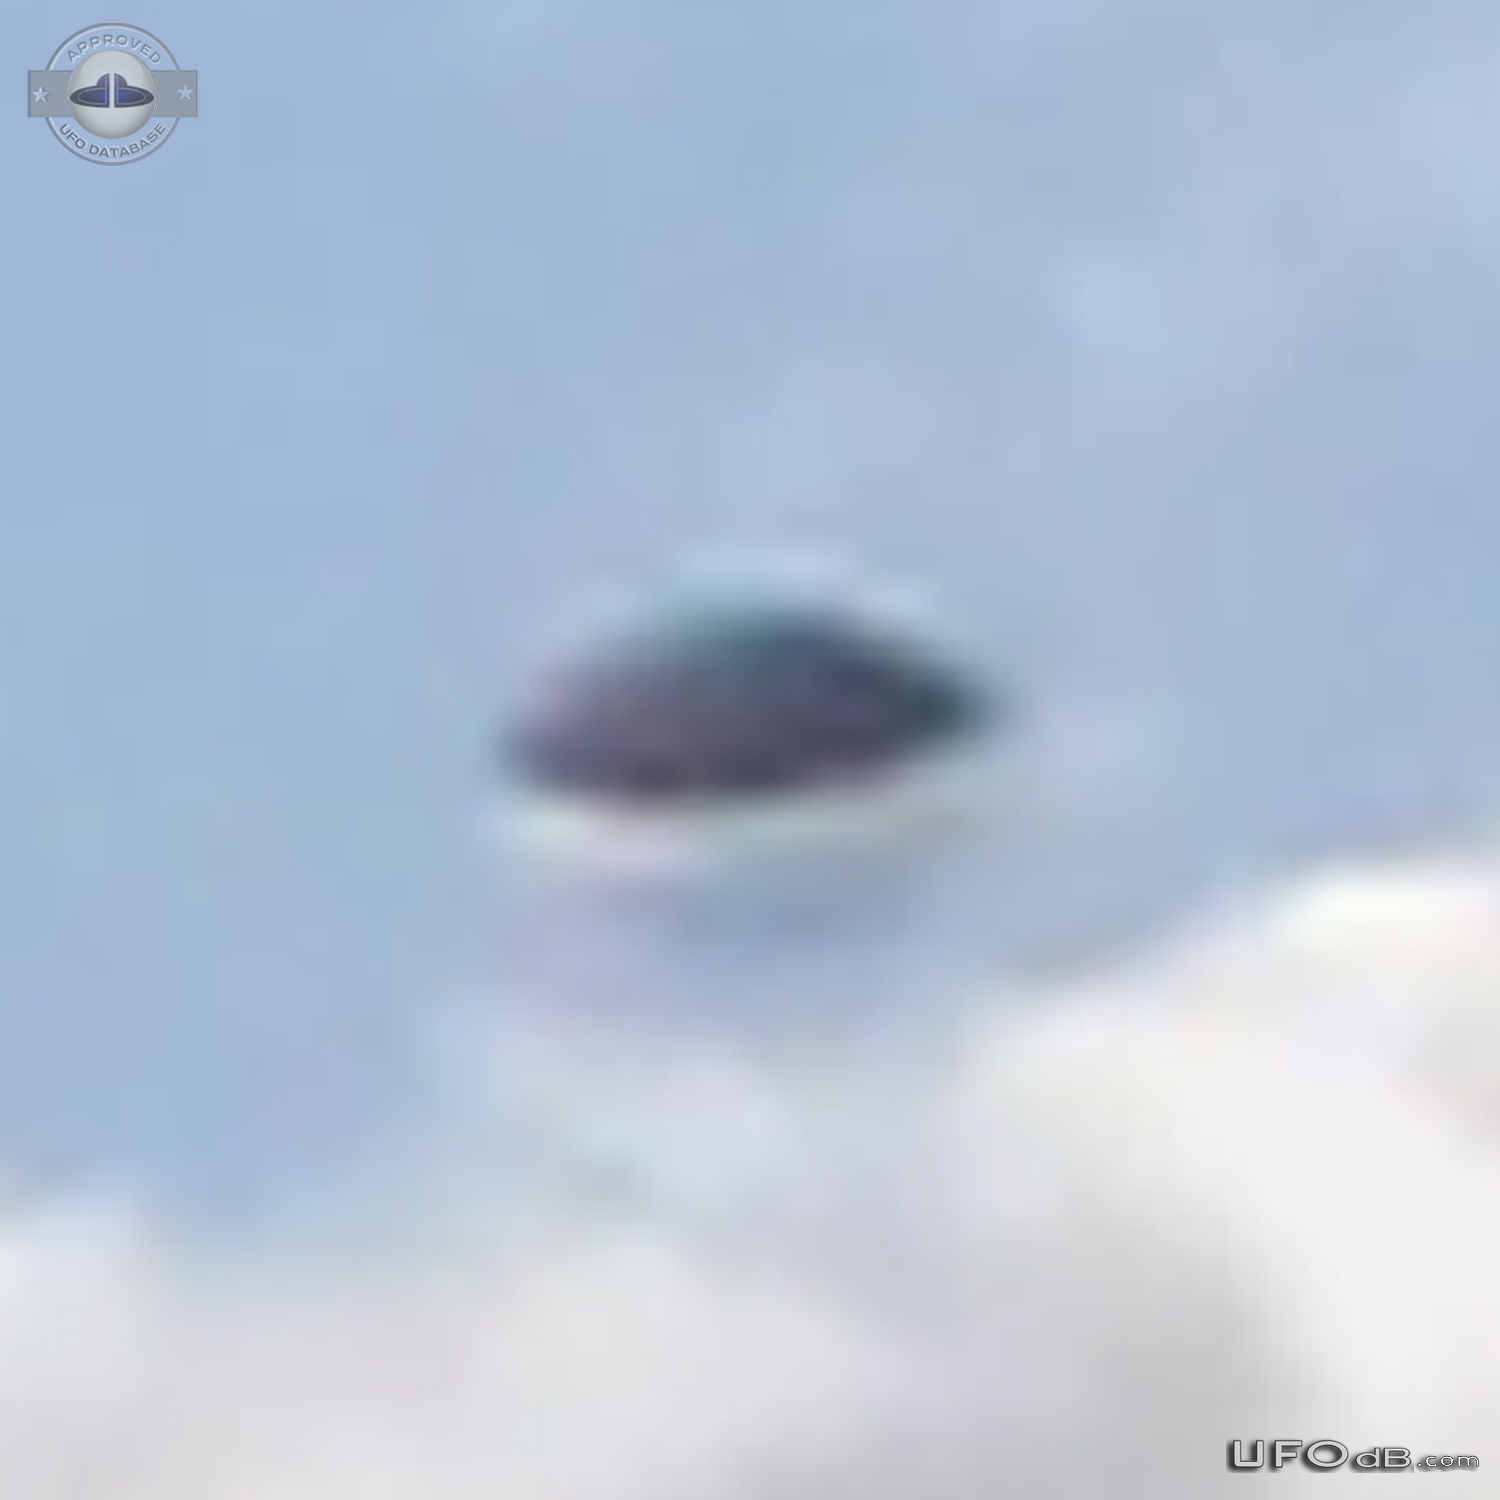 Photos near Grants Pass captured UFO on film - Merlin Oregon USA 2016 UFO Picture #807-6